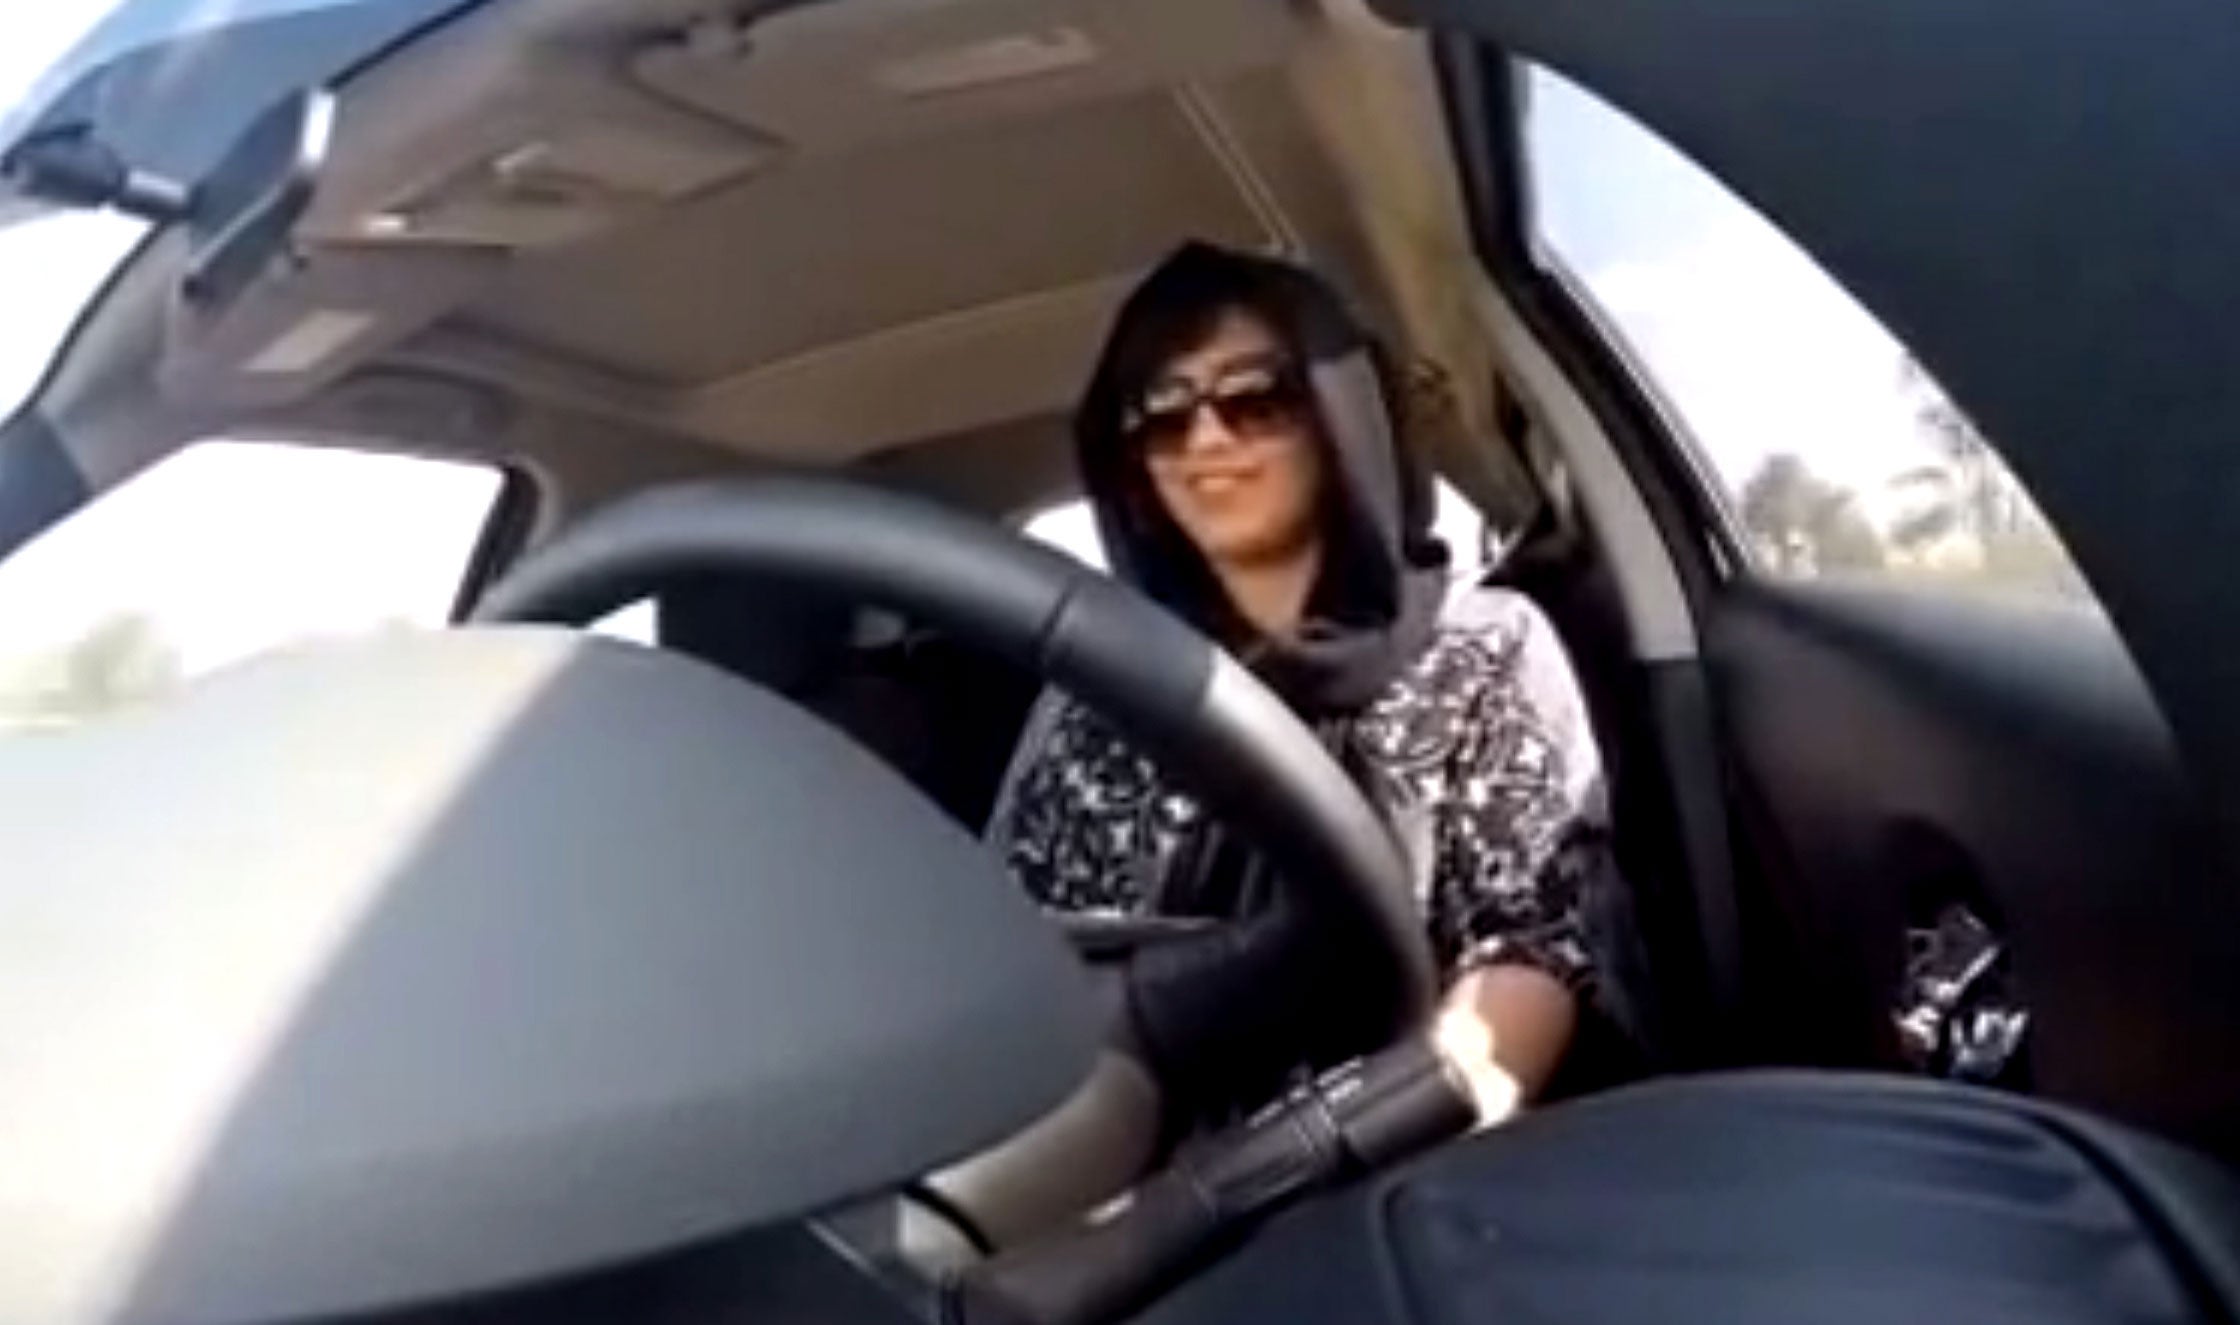 Loujain al-Hathloul driving towards the United Arab Emirates/Saudi Arabia border the day before her arrest